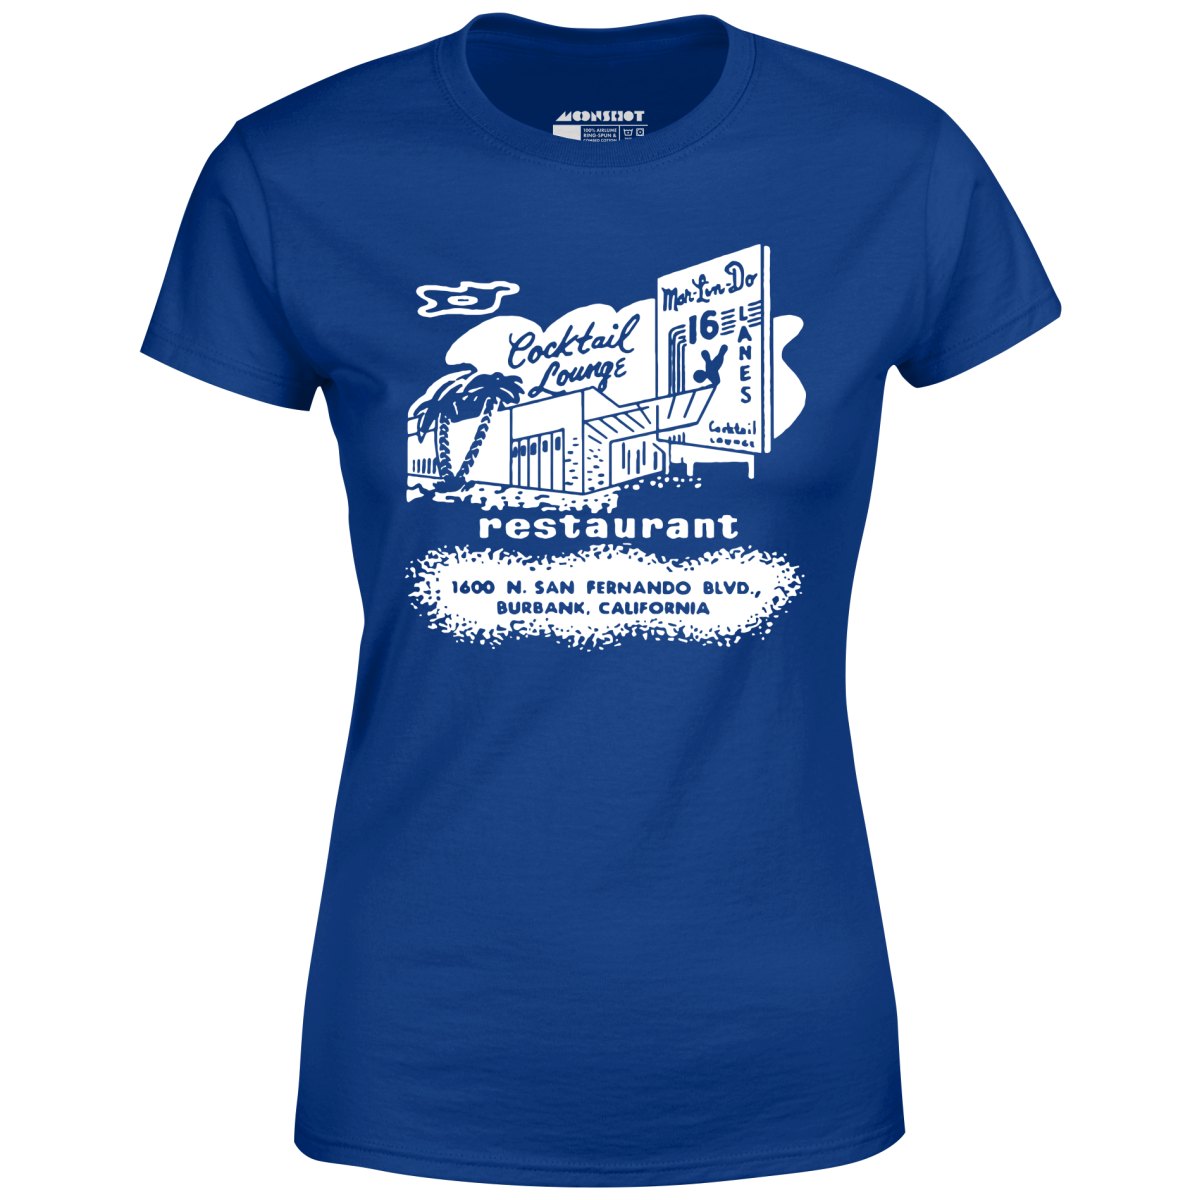 Mar-Lin-Do Lanes - Burbank, CA - Vintage Bowling Alley - Women's T-Shirt